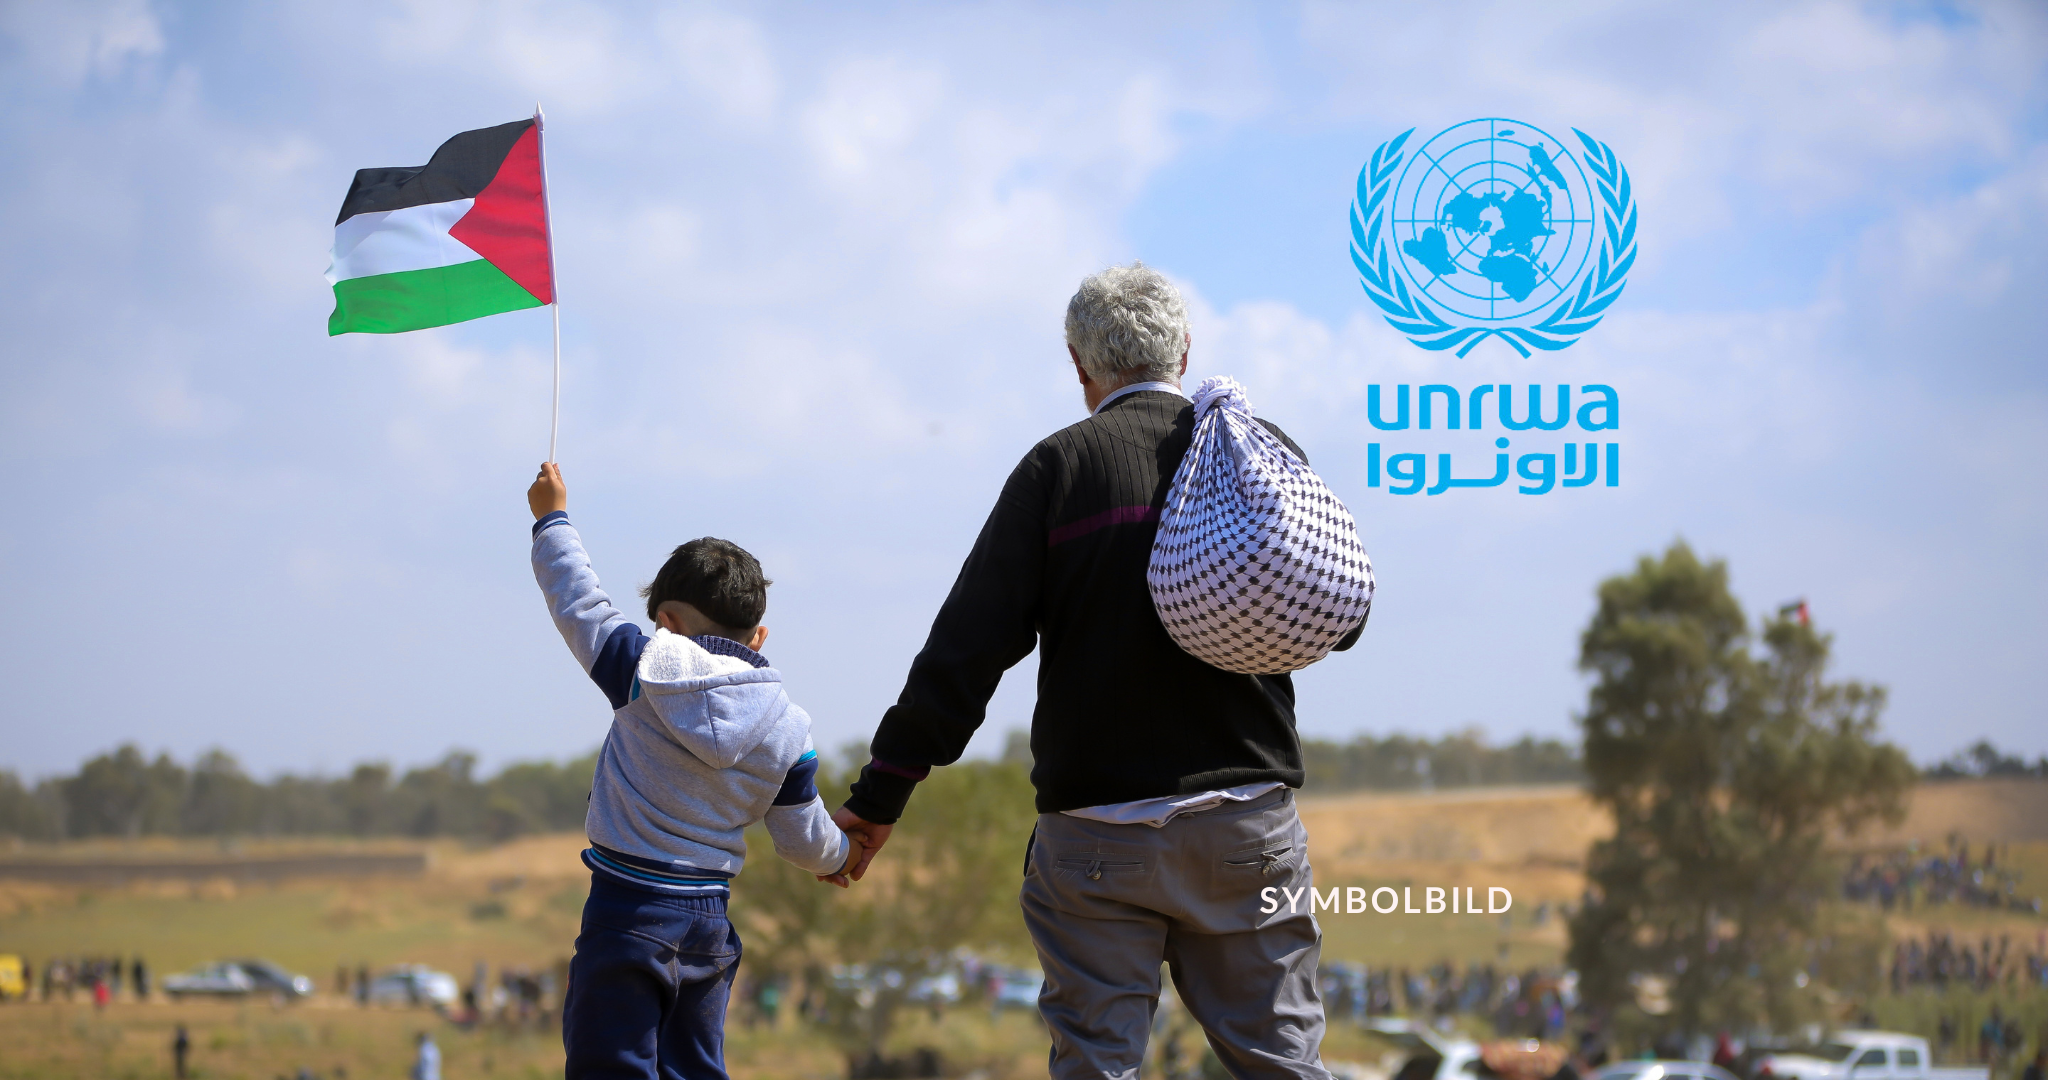 Hamas UNRWA Symbolbild